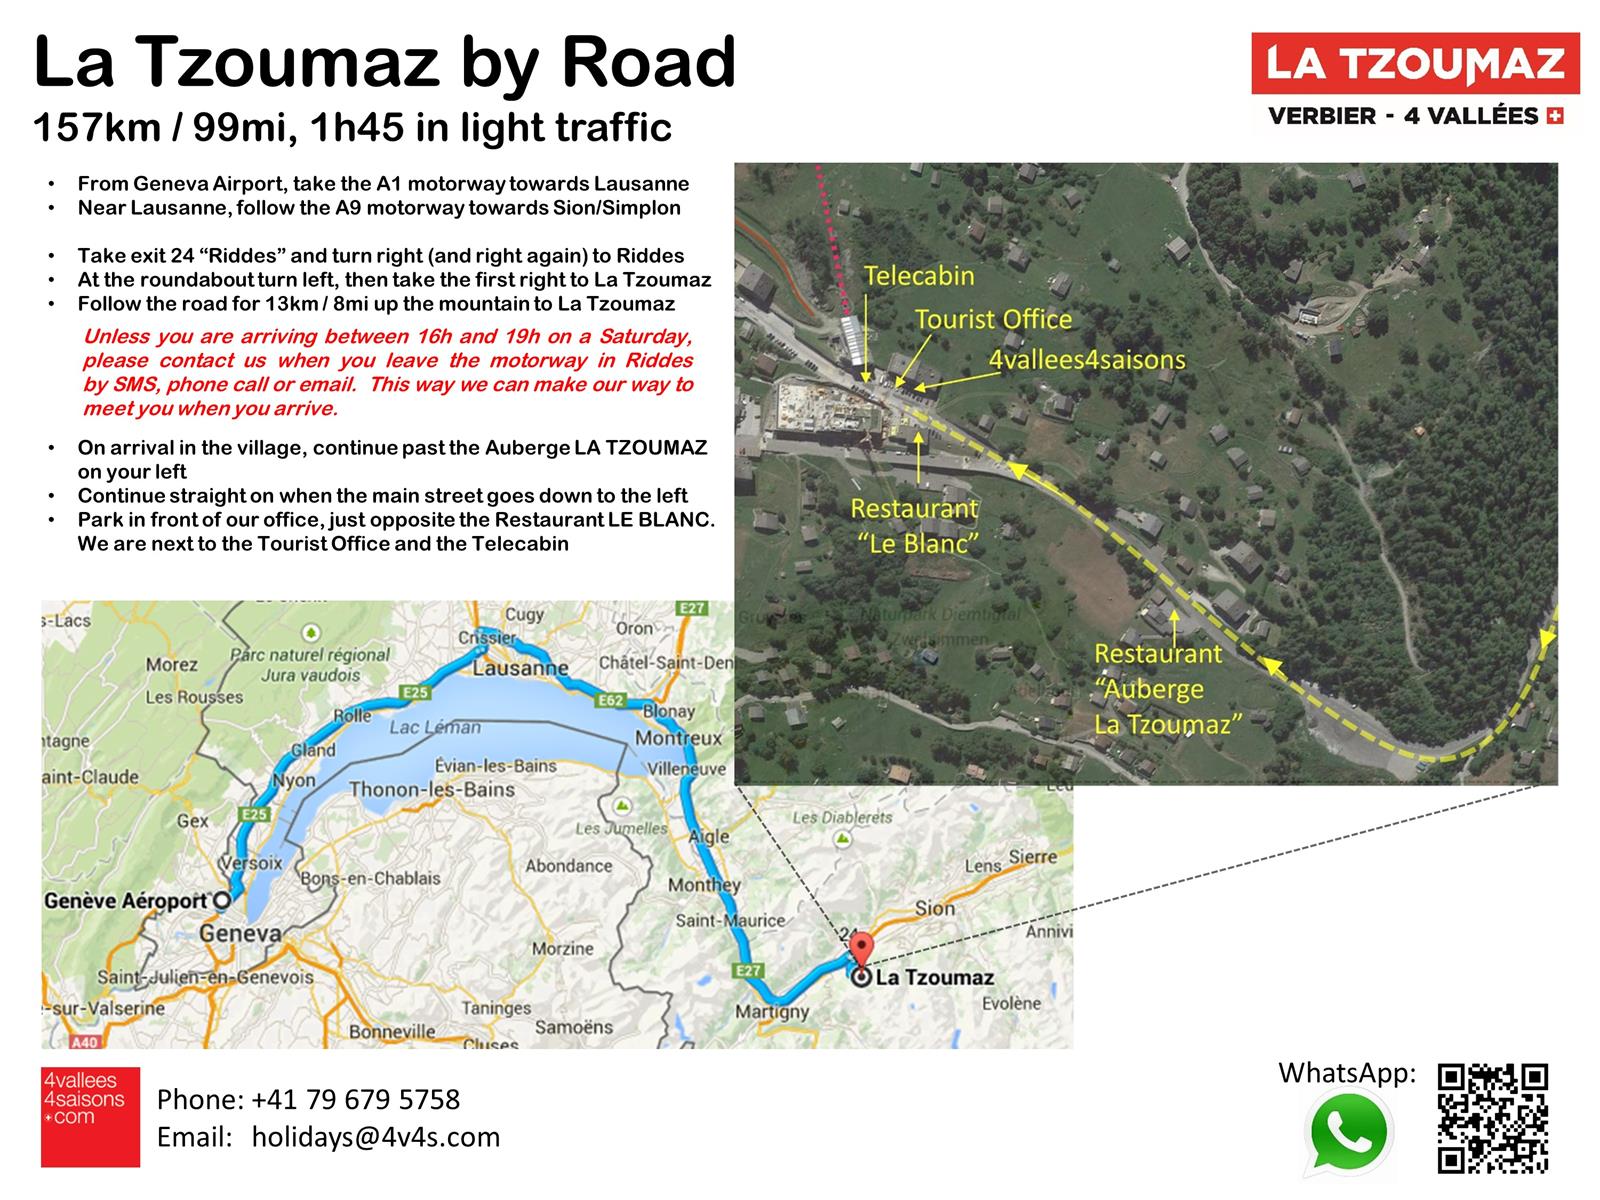 Getting to La Tzoumaz by road